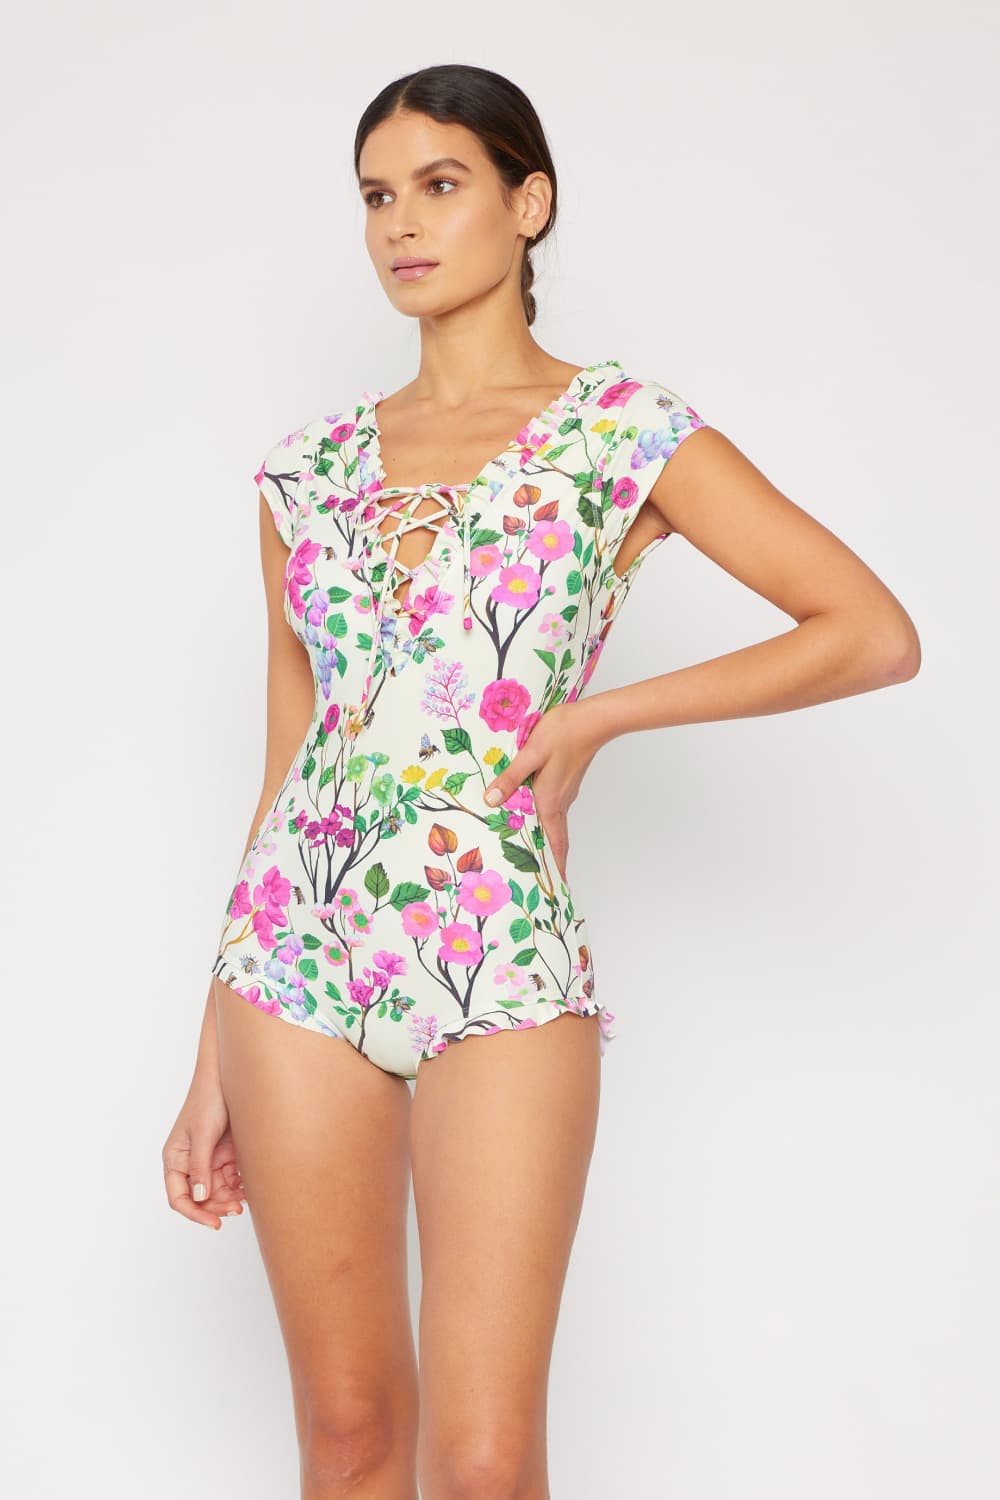 Marina West Swim Bring Me Flowers V-Neck One Piece Swimsuit Cherry Blossom Cream Trendsi